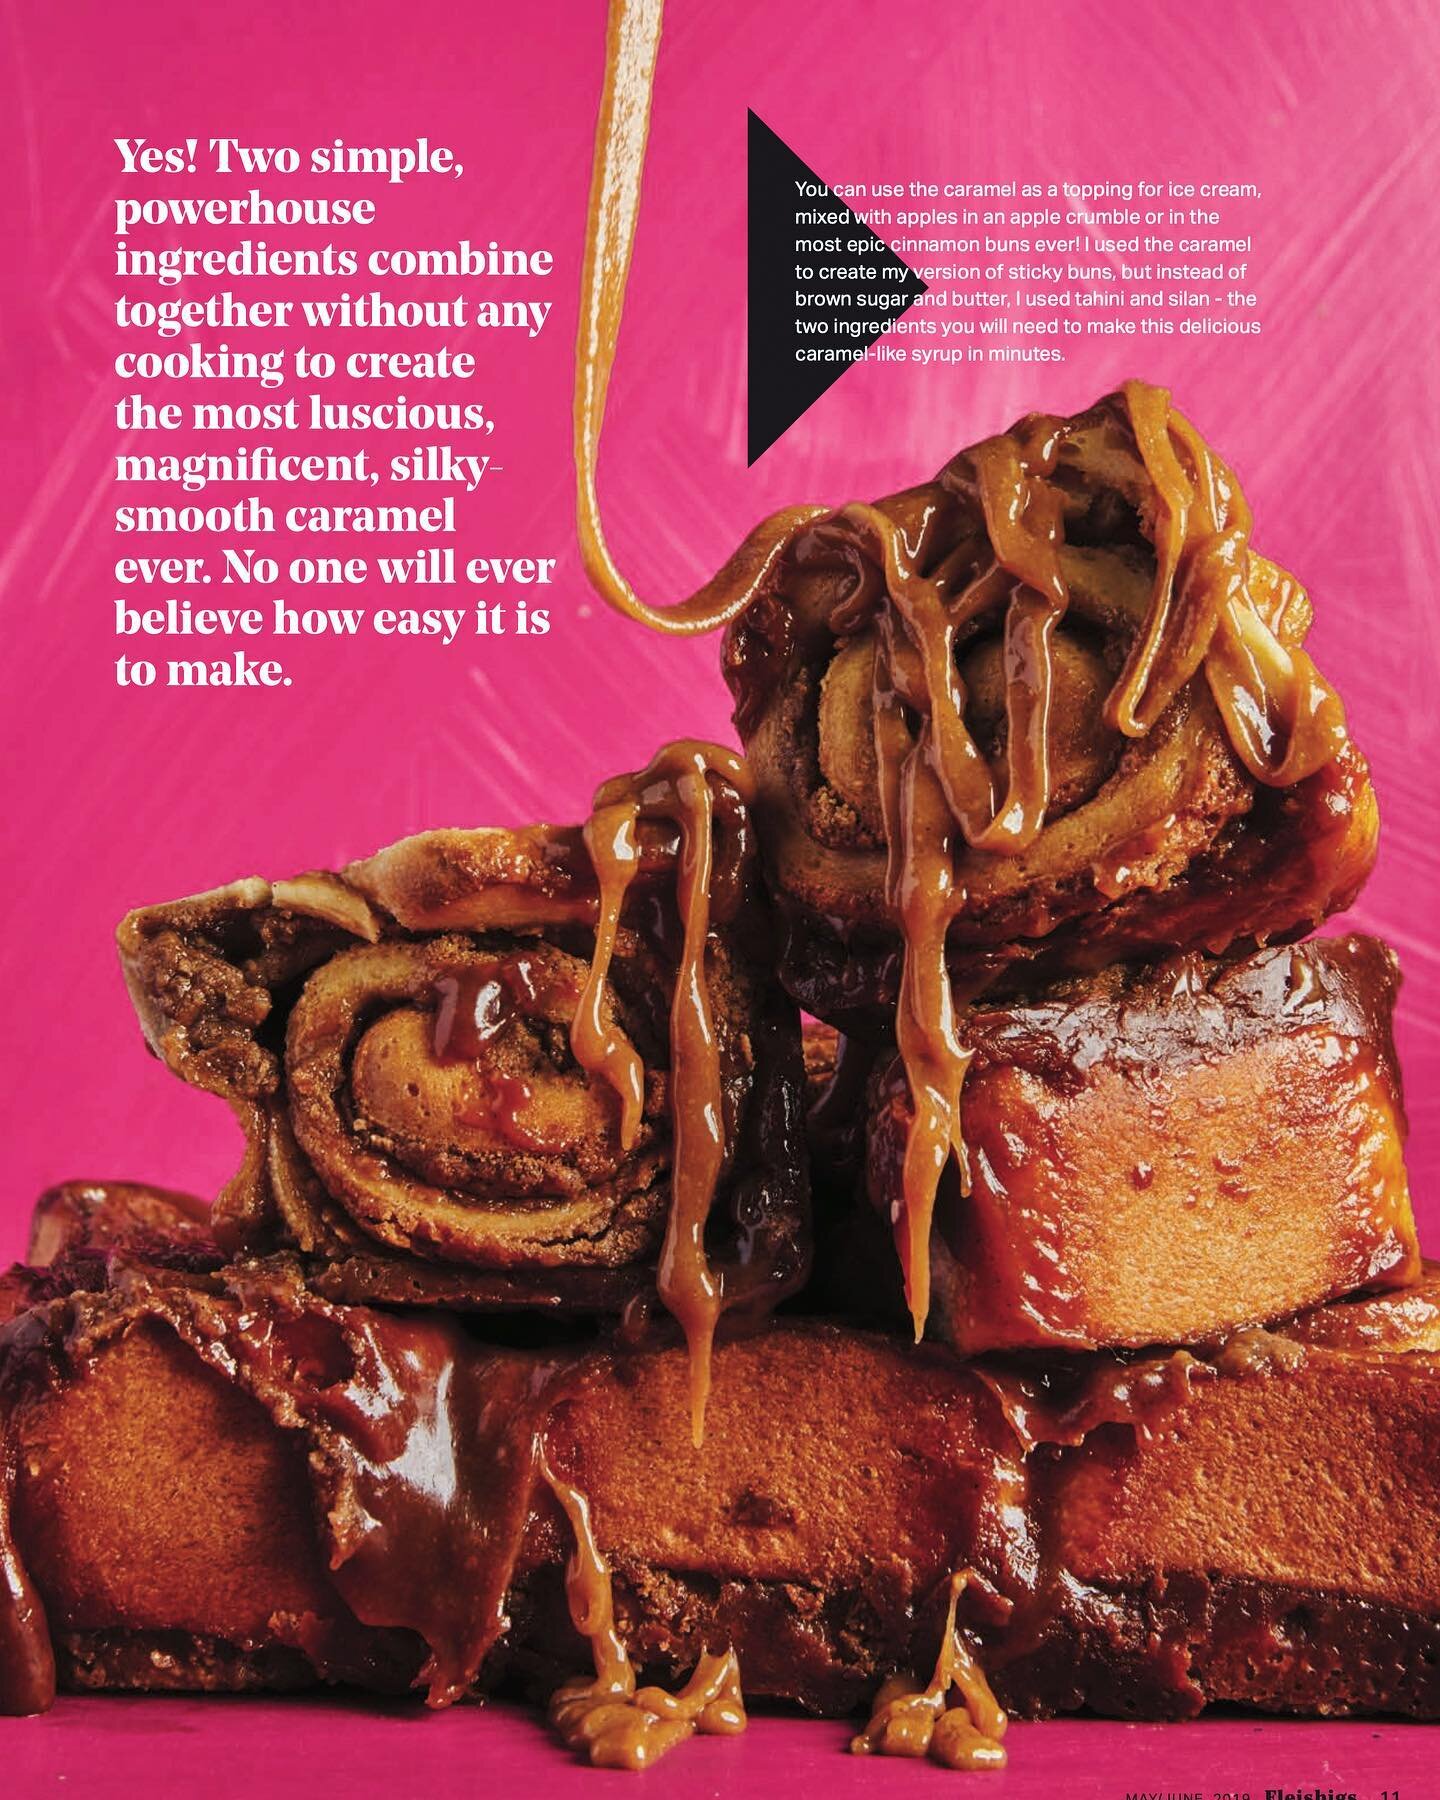 Tahini cinnamon buns on flamingo pink 🍩
-
-
Cover story for @fleishigsmag Issue 007
Editor in Chief/Stylist: @shifraklein -
-
#fleishigs #fleishigsmag #food #foodie #foodphotography #foodmagazine #tearsheet #tahinicinnamon #cinnamon #tahini #bakedgo